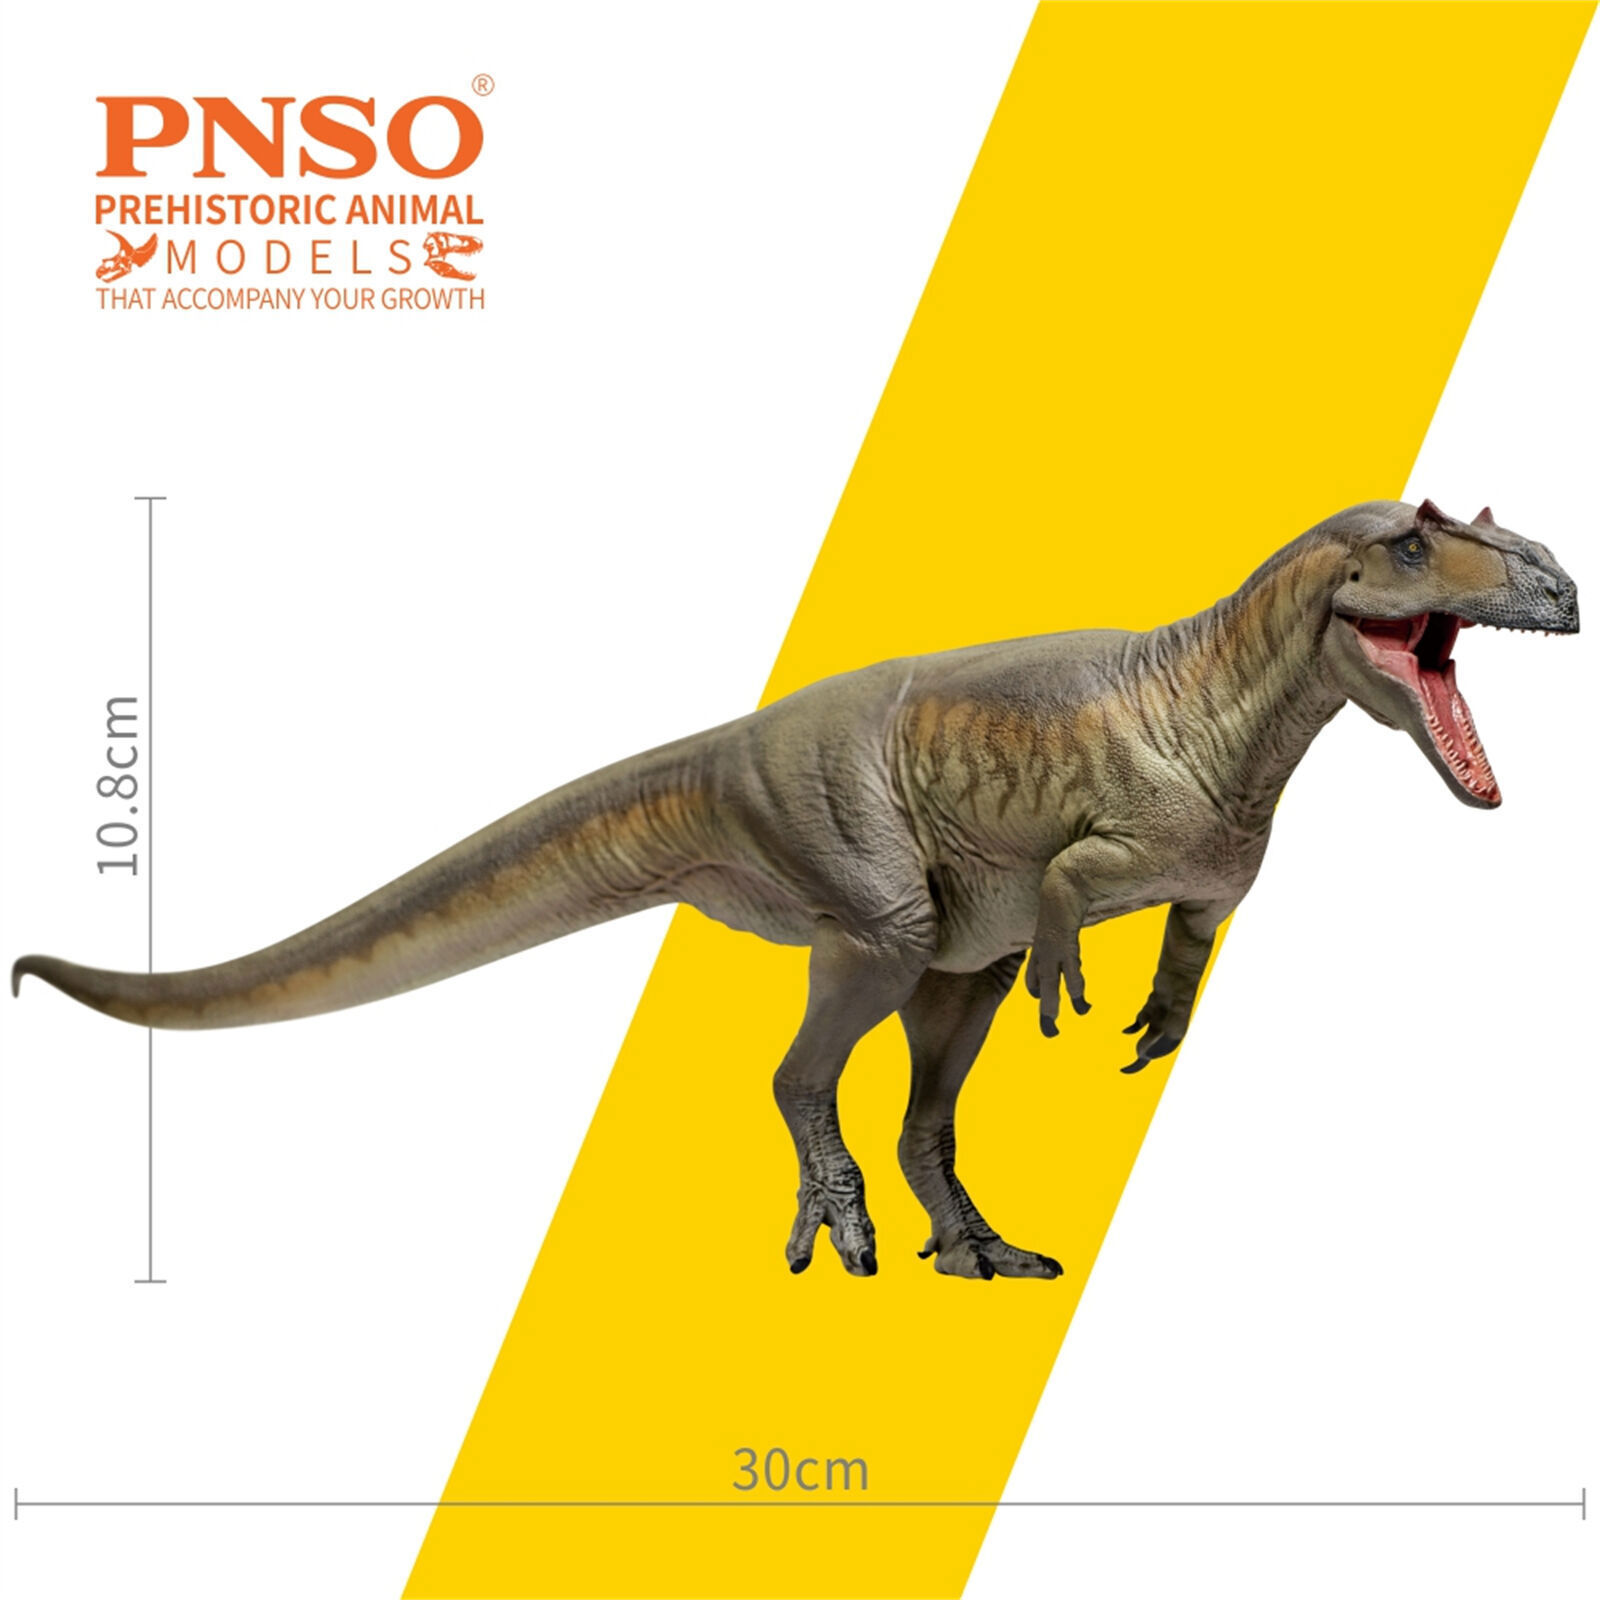 Pnso 75 Saurophaganax Donald Model Prehistoric Animal Dinosaur Collection Decor